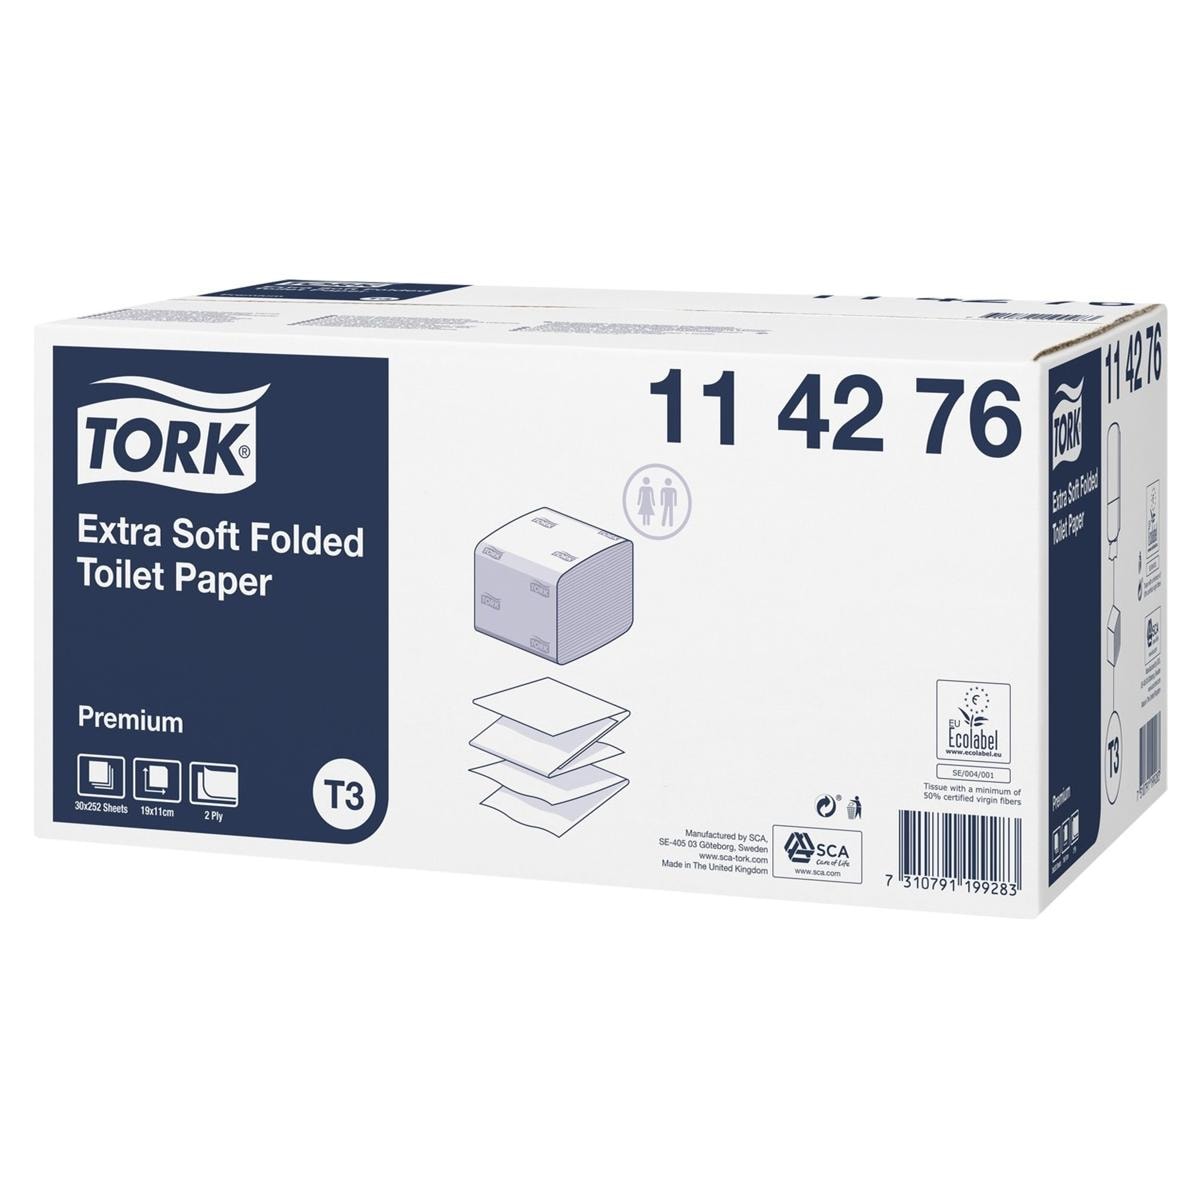 Tork Extra Soft Folded Toilet Paper Premium - 114276